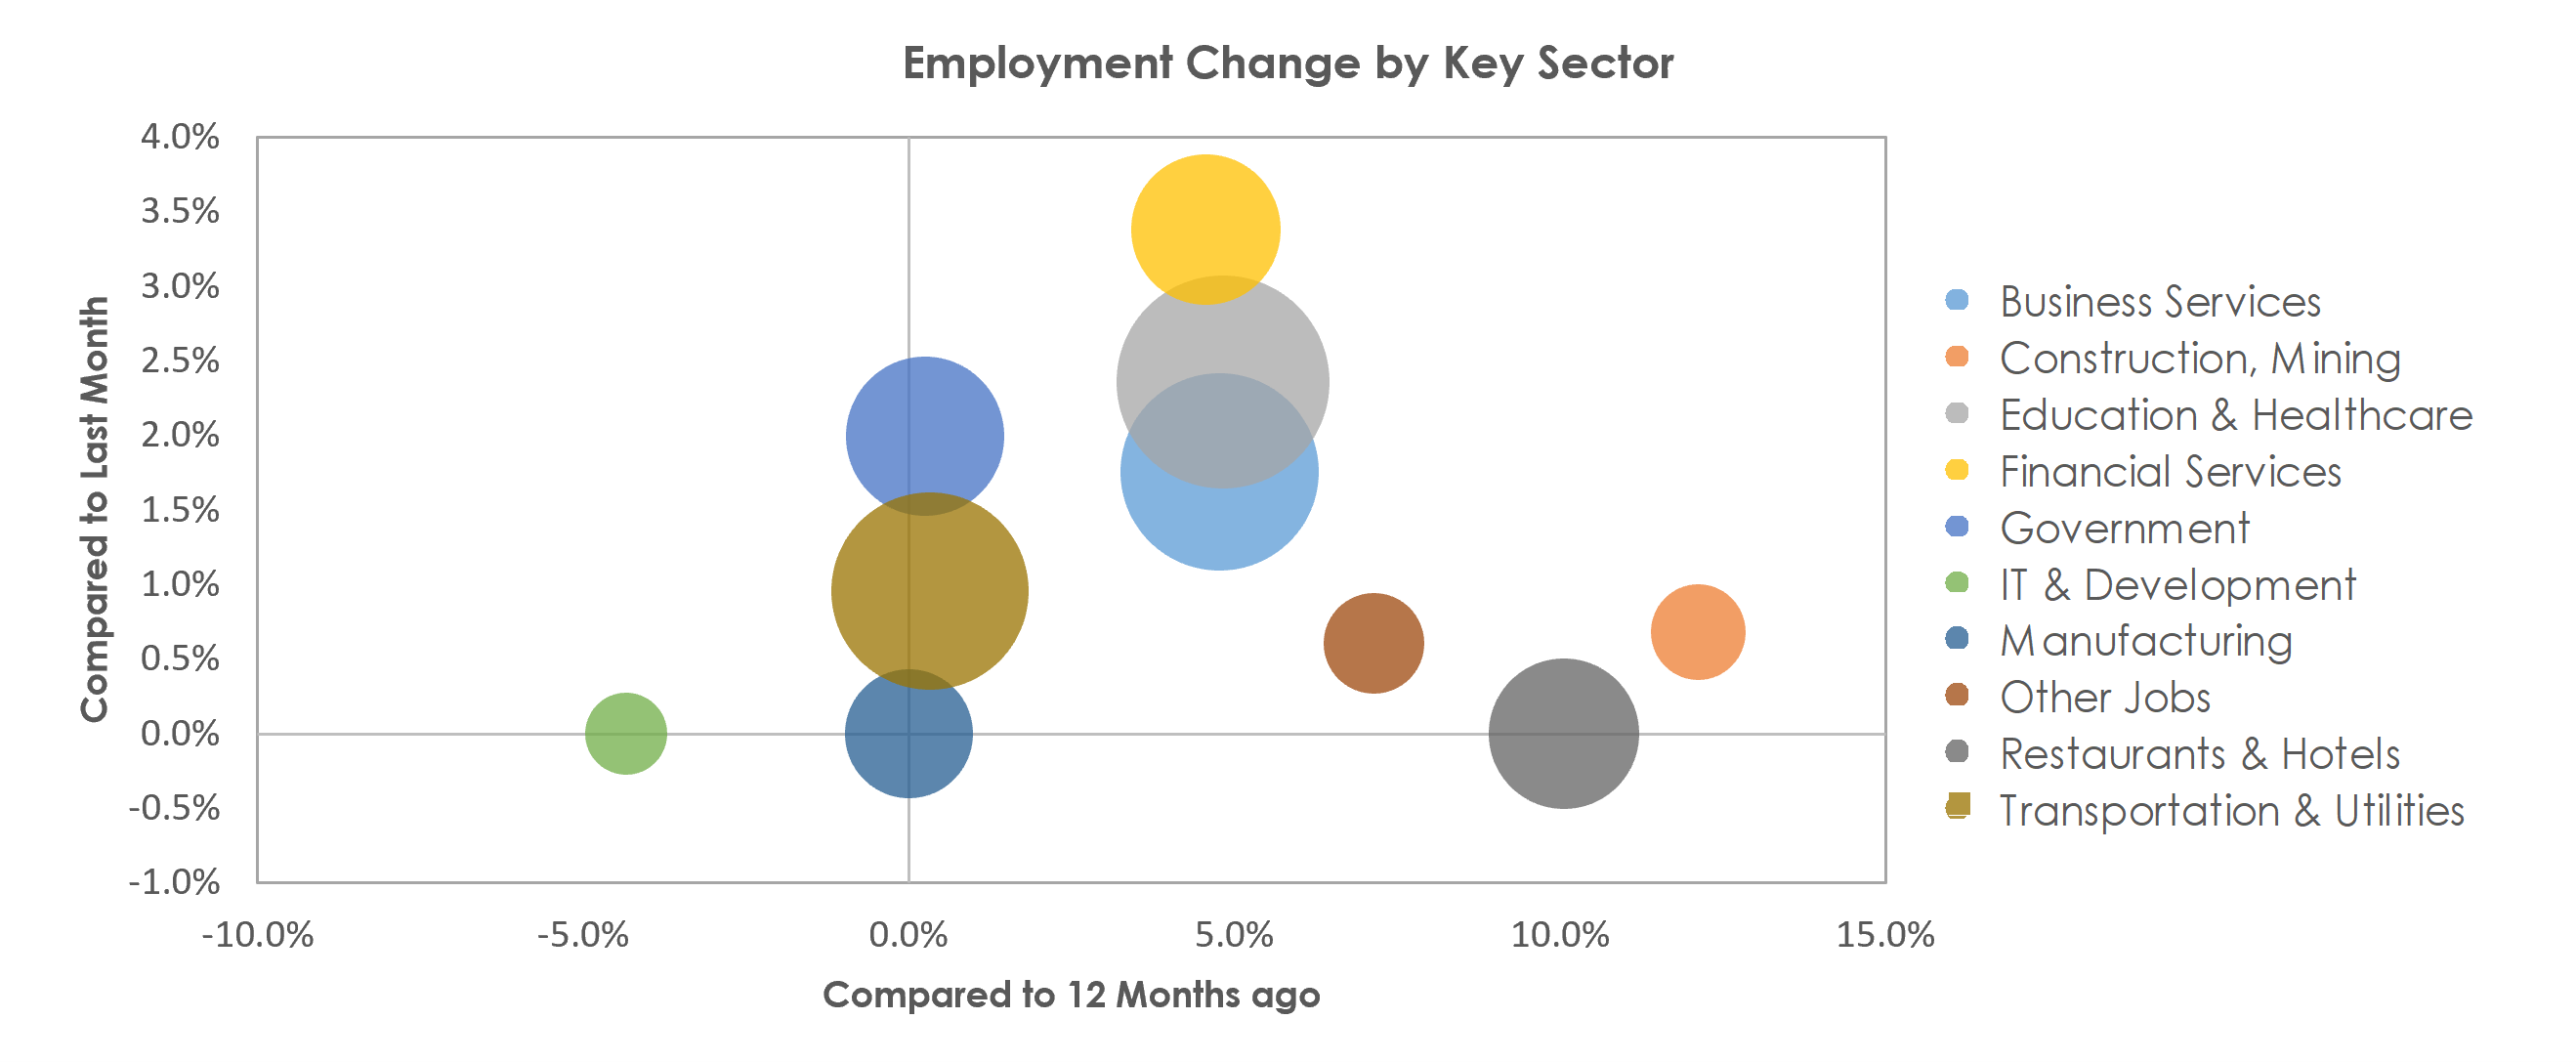 Bridgeport-Stamford-Norwalk, CT Unemployment by Industry October 2021